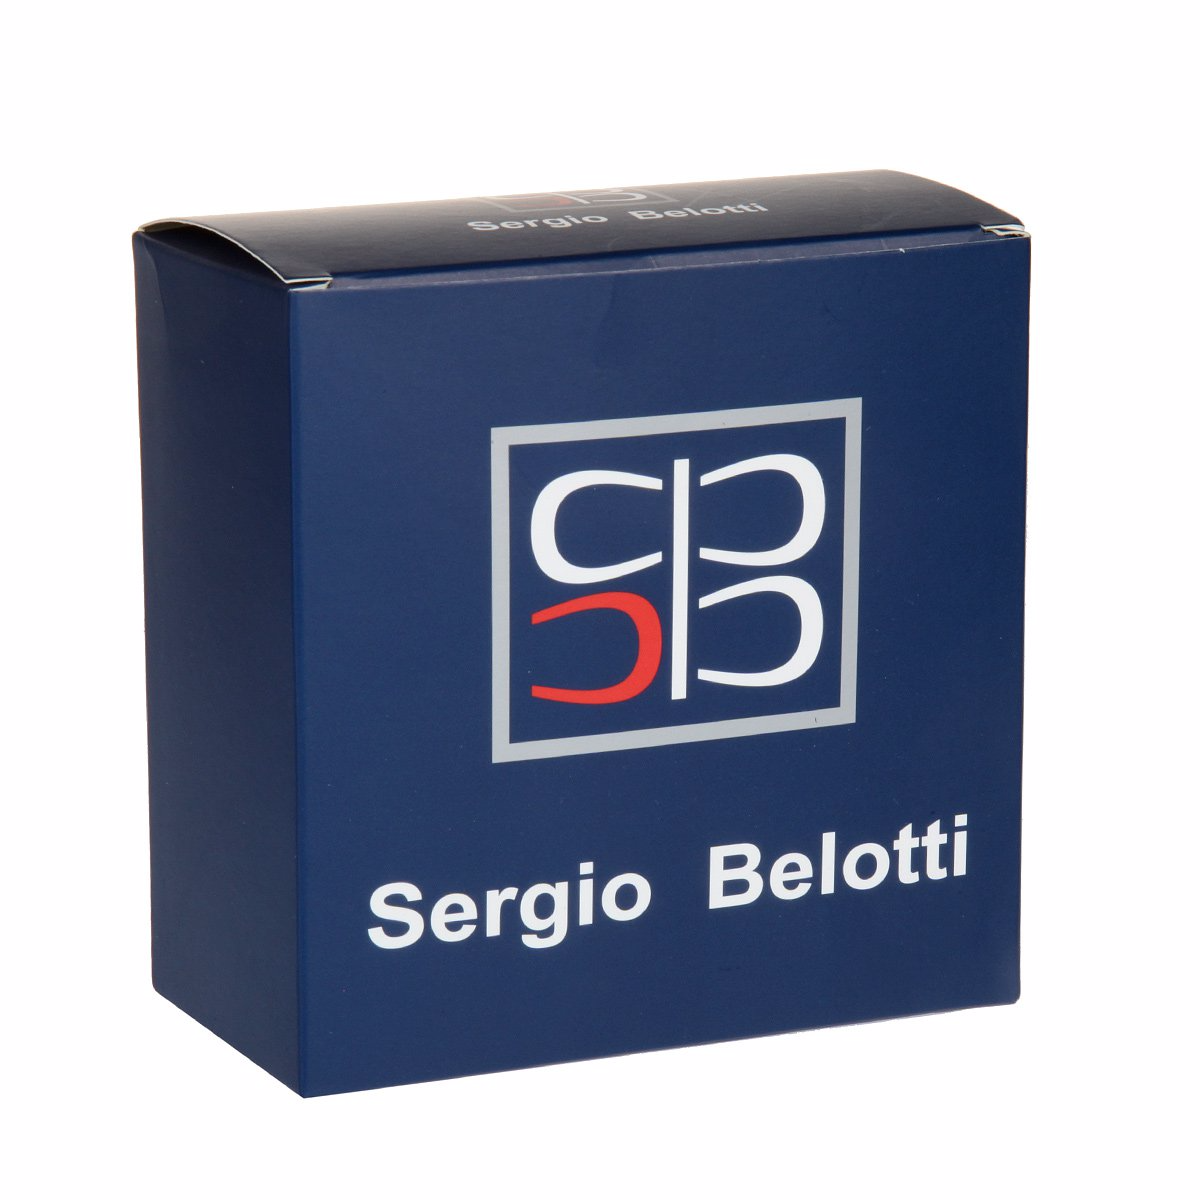 Sergio Belotti
2374/40 Nero Ремни и пояса